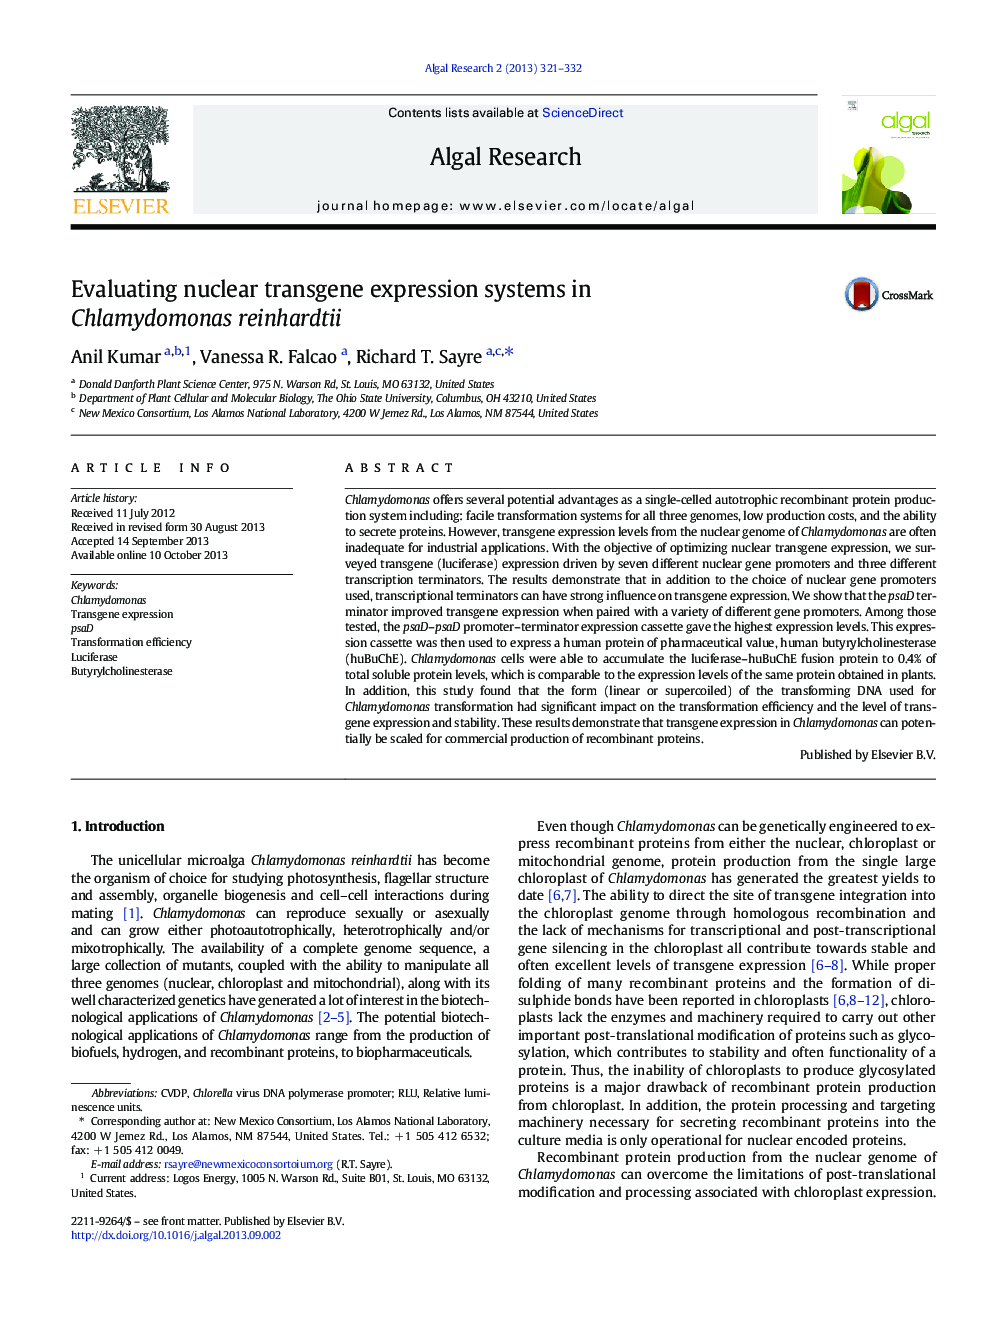 Evaluating nuclear transgene expression systems in Chlamydomonas reinhardtii